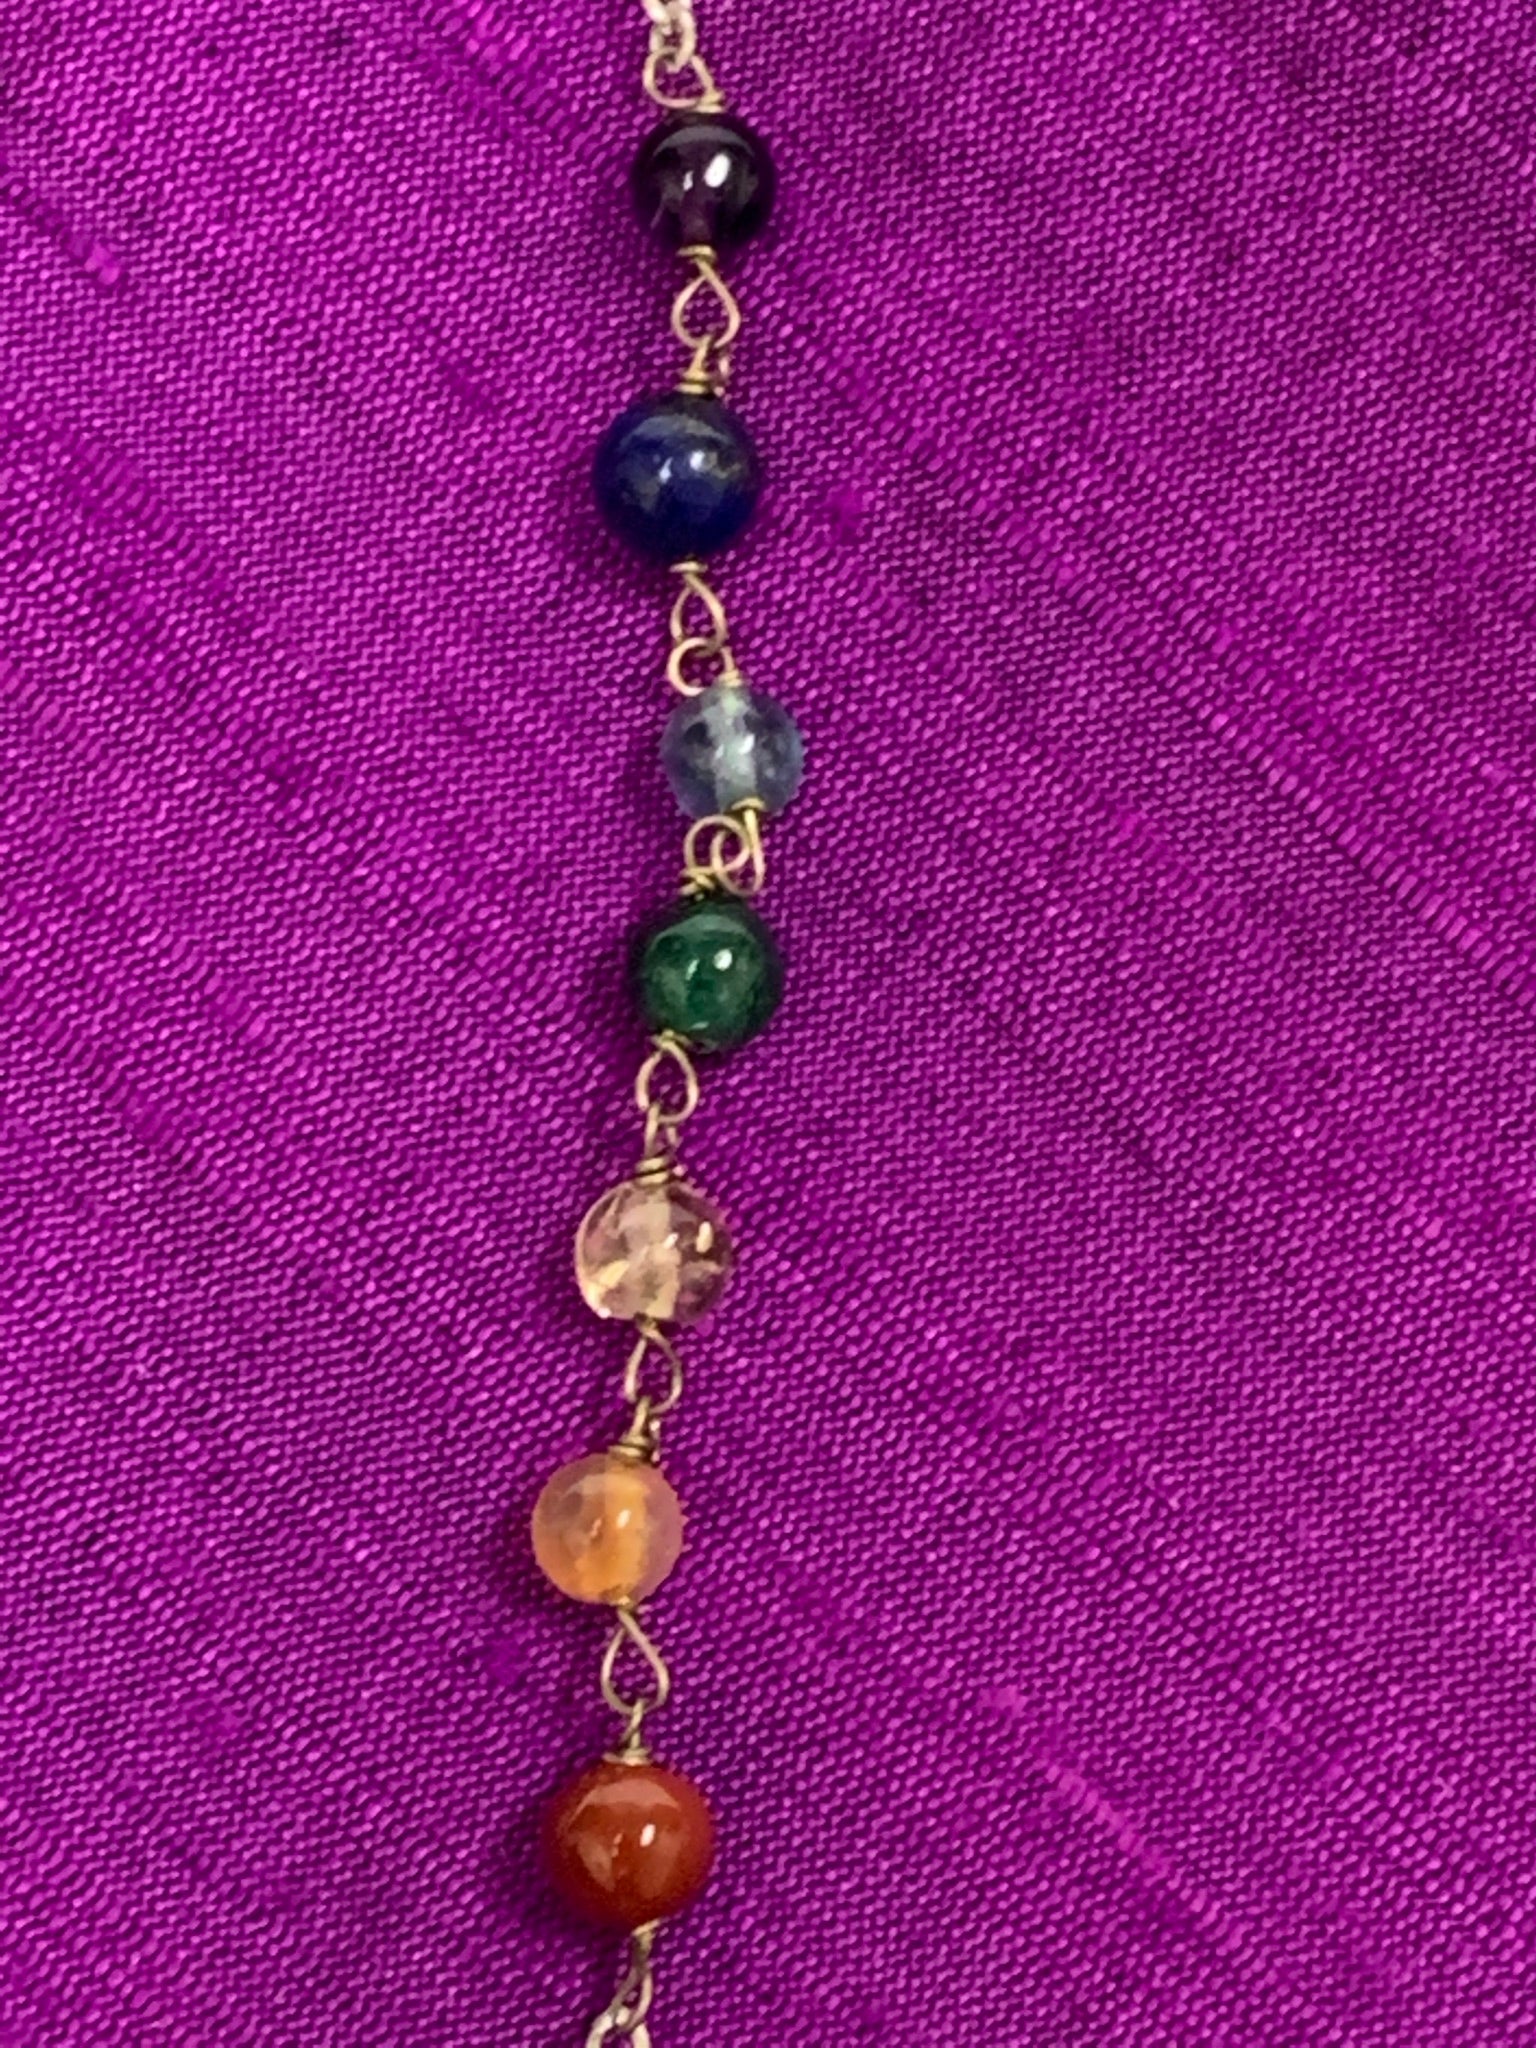 Close-up view of the 7 chakra gemstone beads on the pendulum's chain.